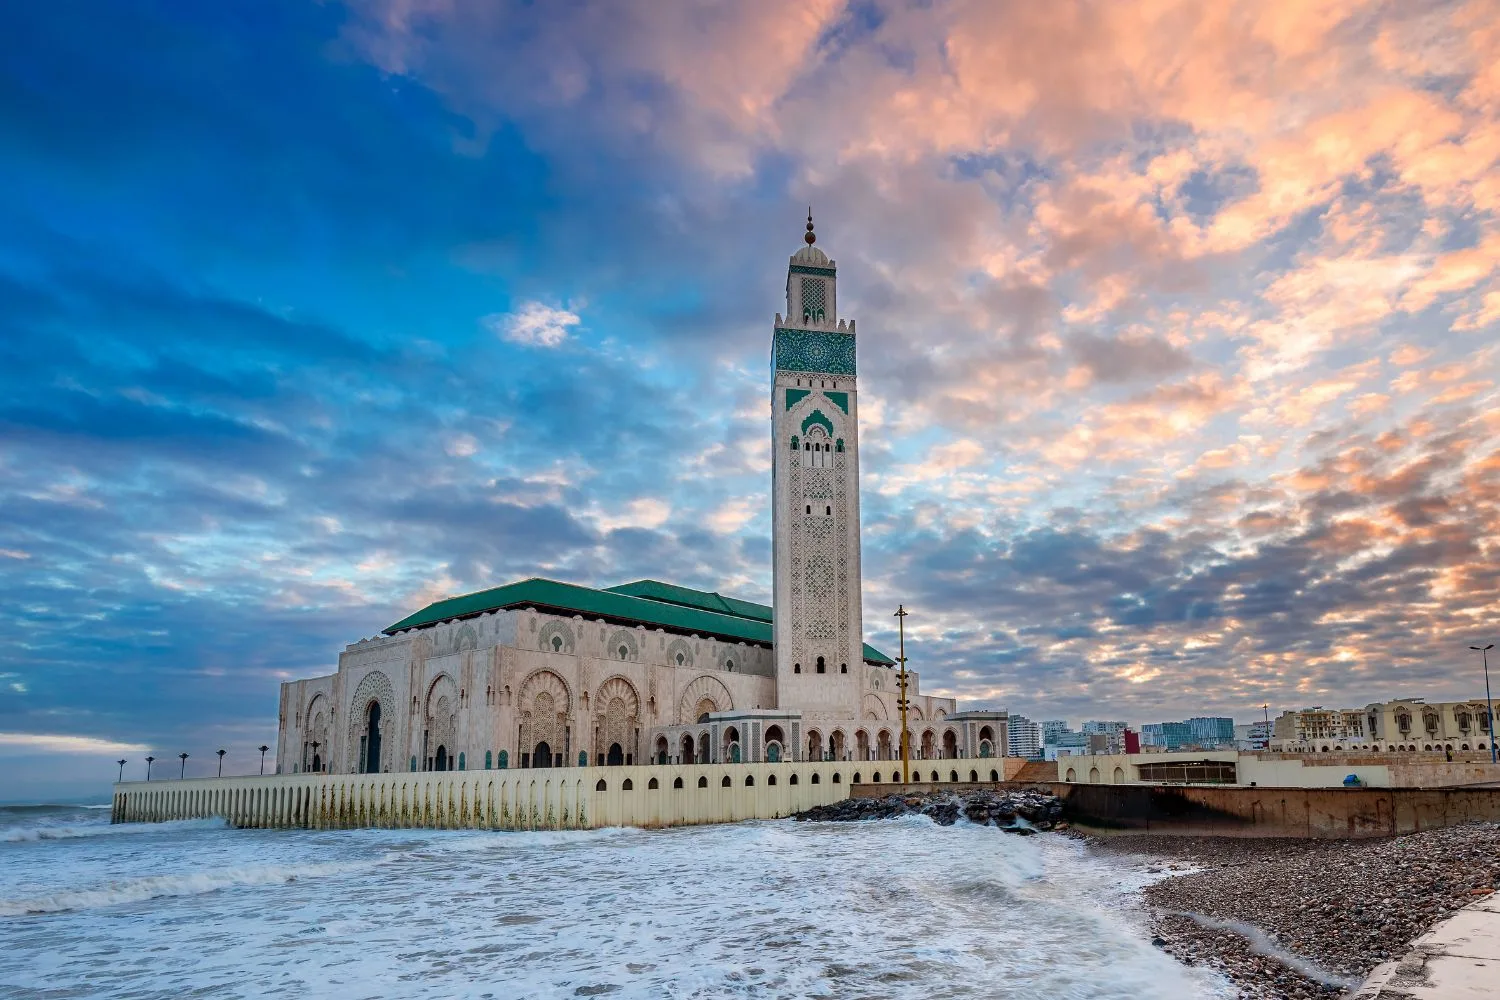 Hassan II Mosque in Casablanca, Morocco shot at sunrise